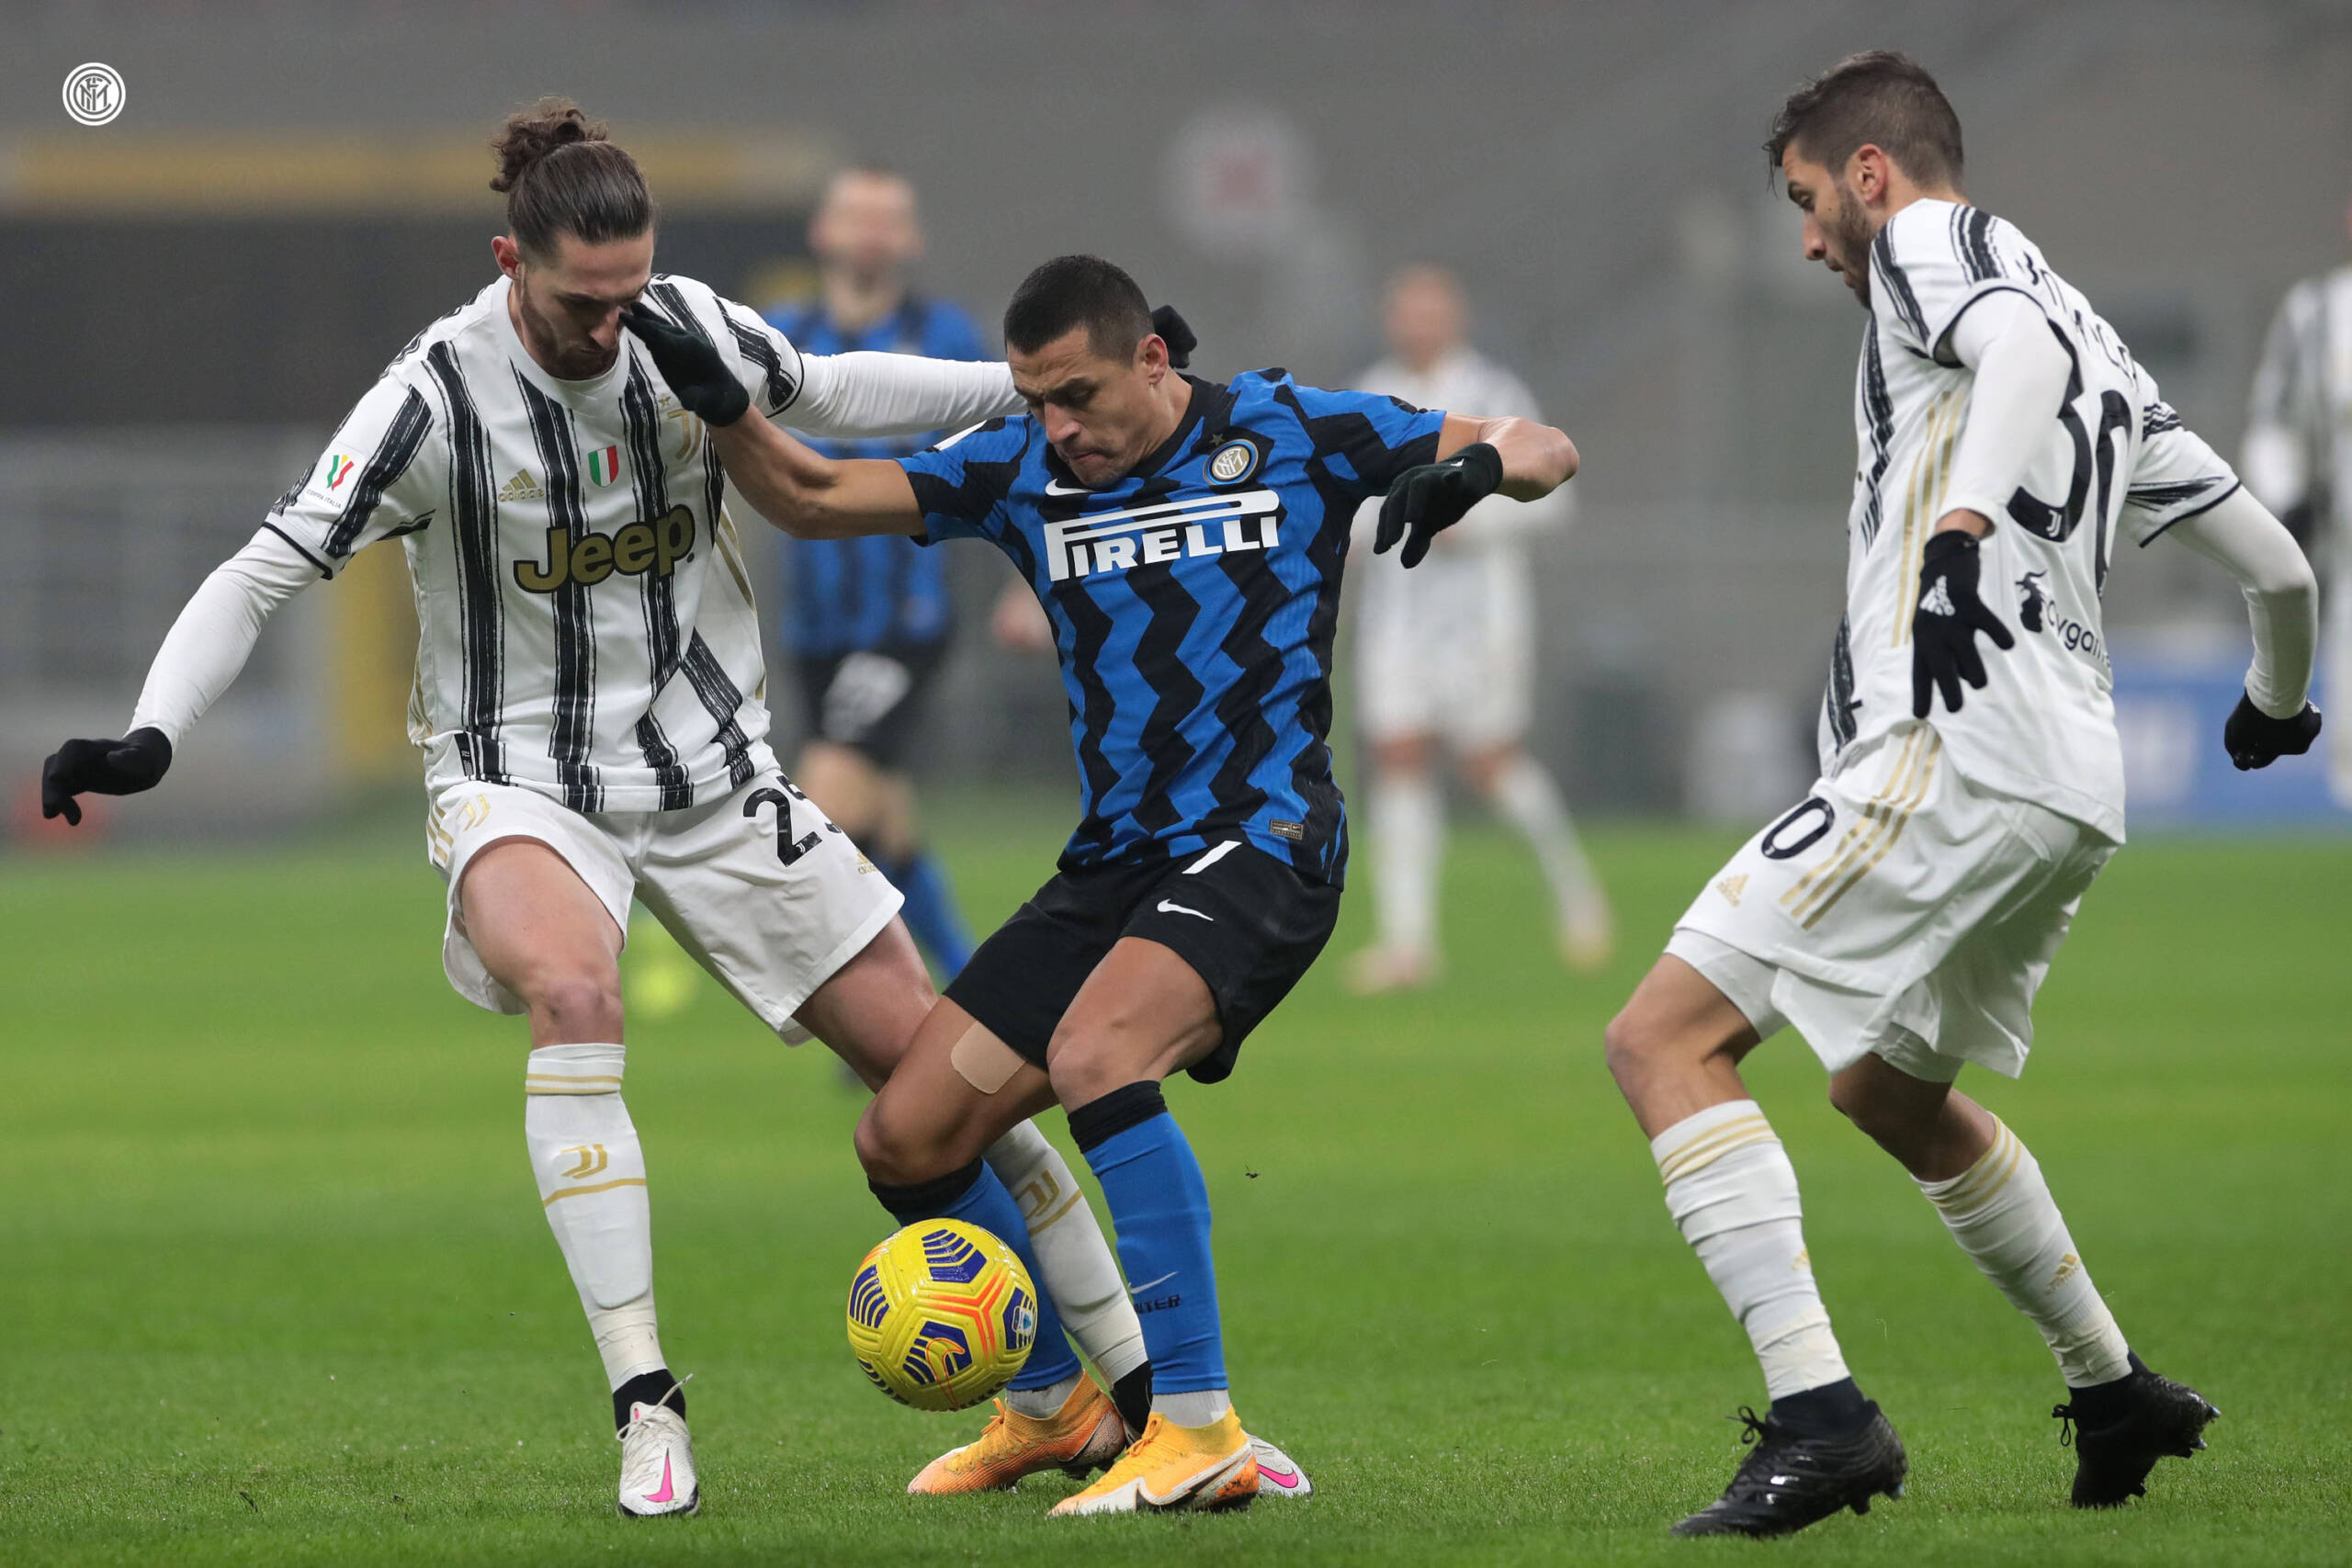 Rivincita Juve contro l’Inter in Coppa Italia grazie a 2 gol di CR7